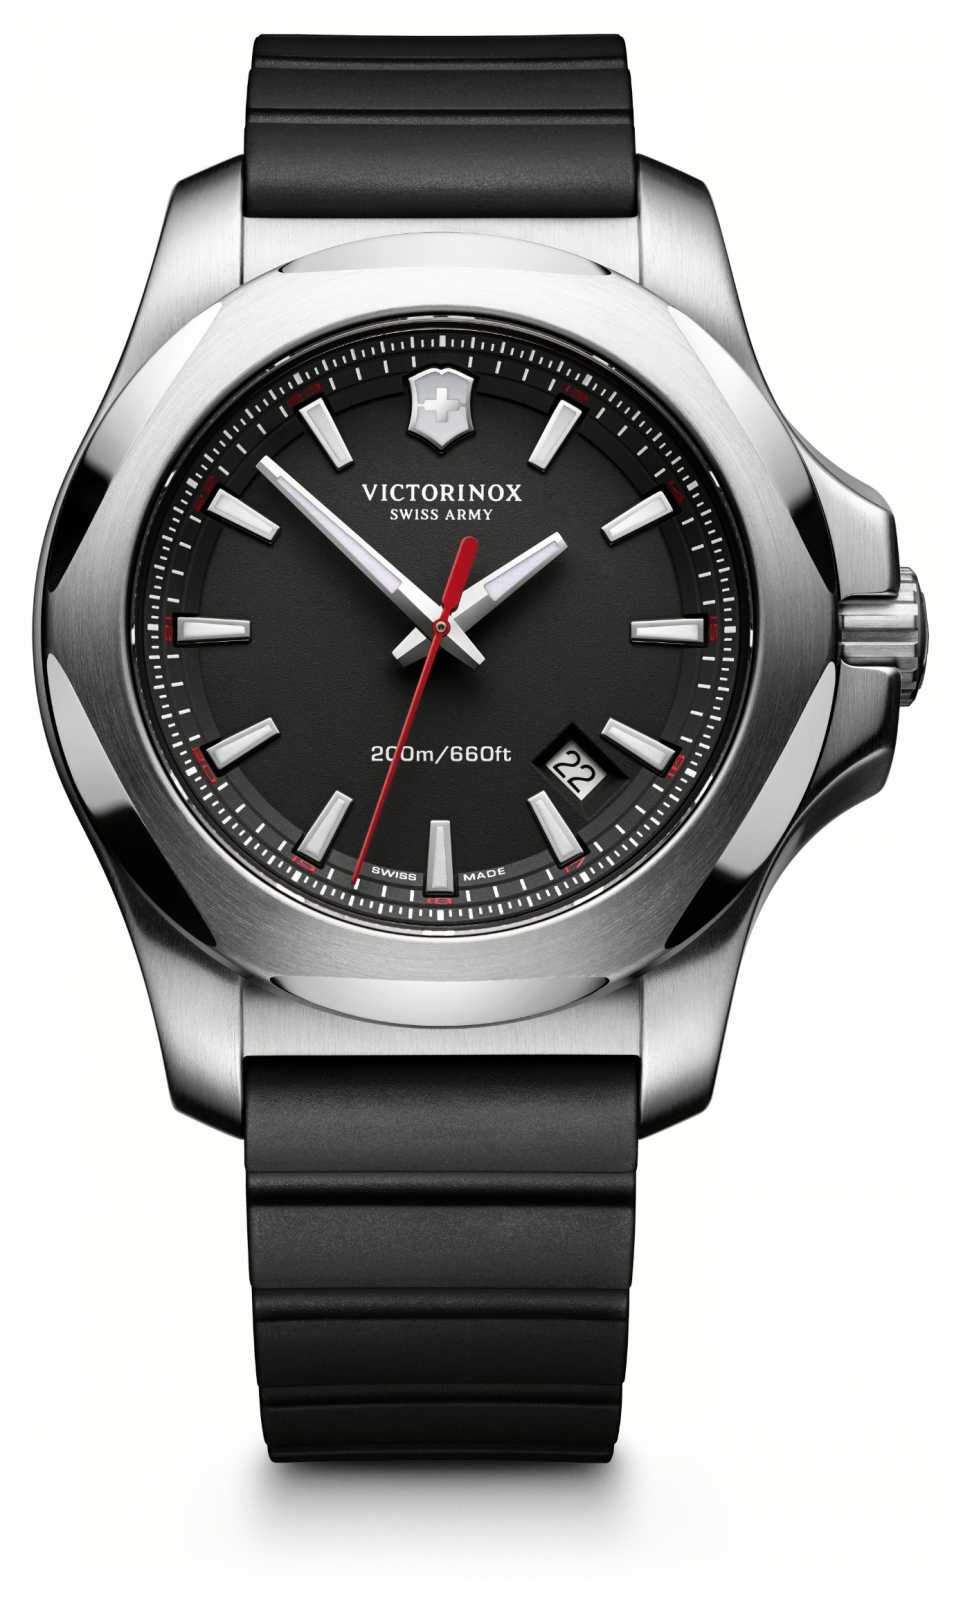 Victorinox 241682.1 I.N.O.X. Black Rubber Strap Men's Watch